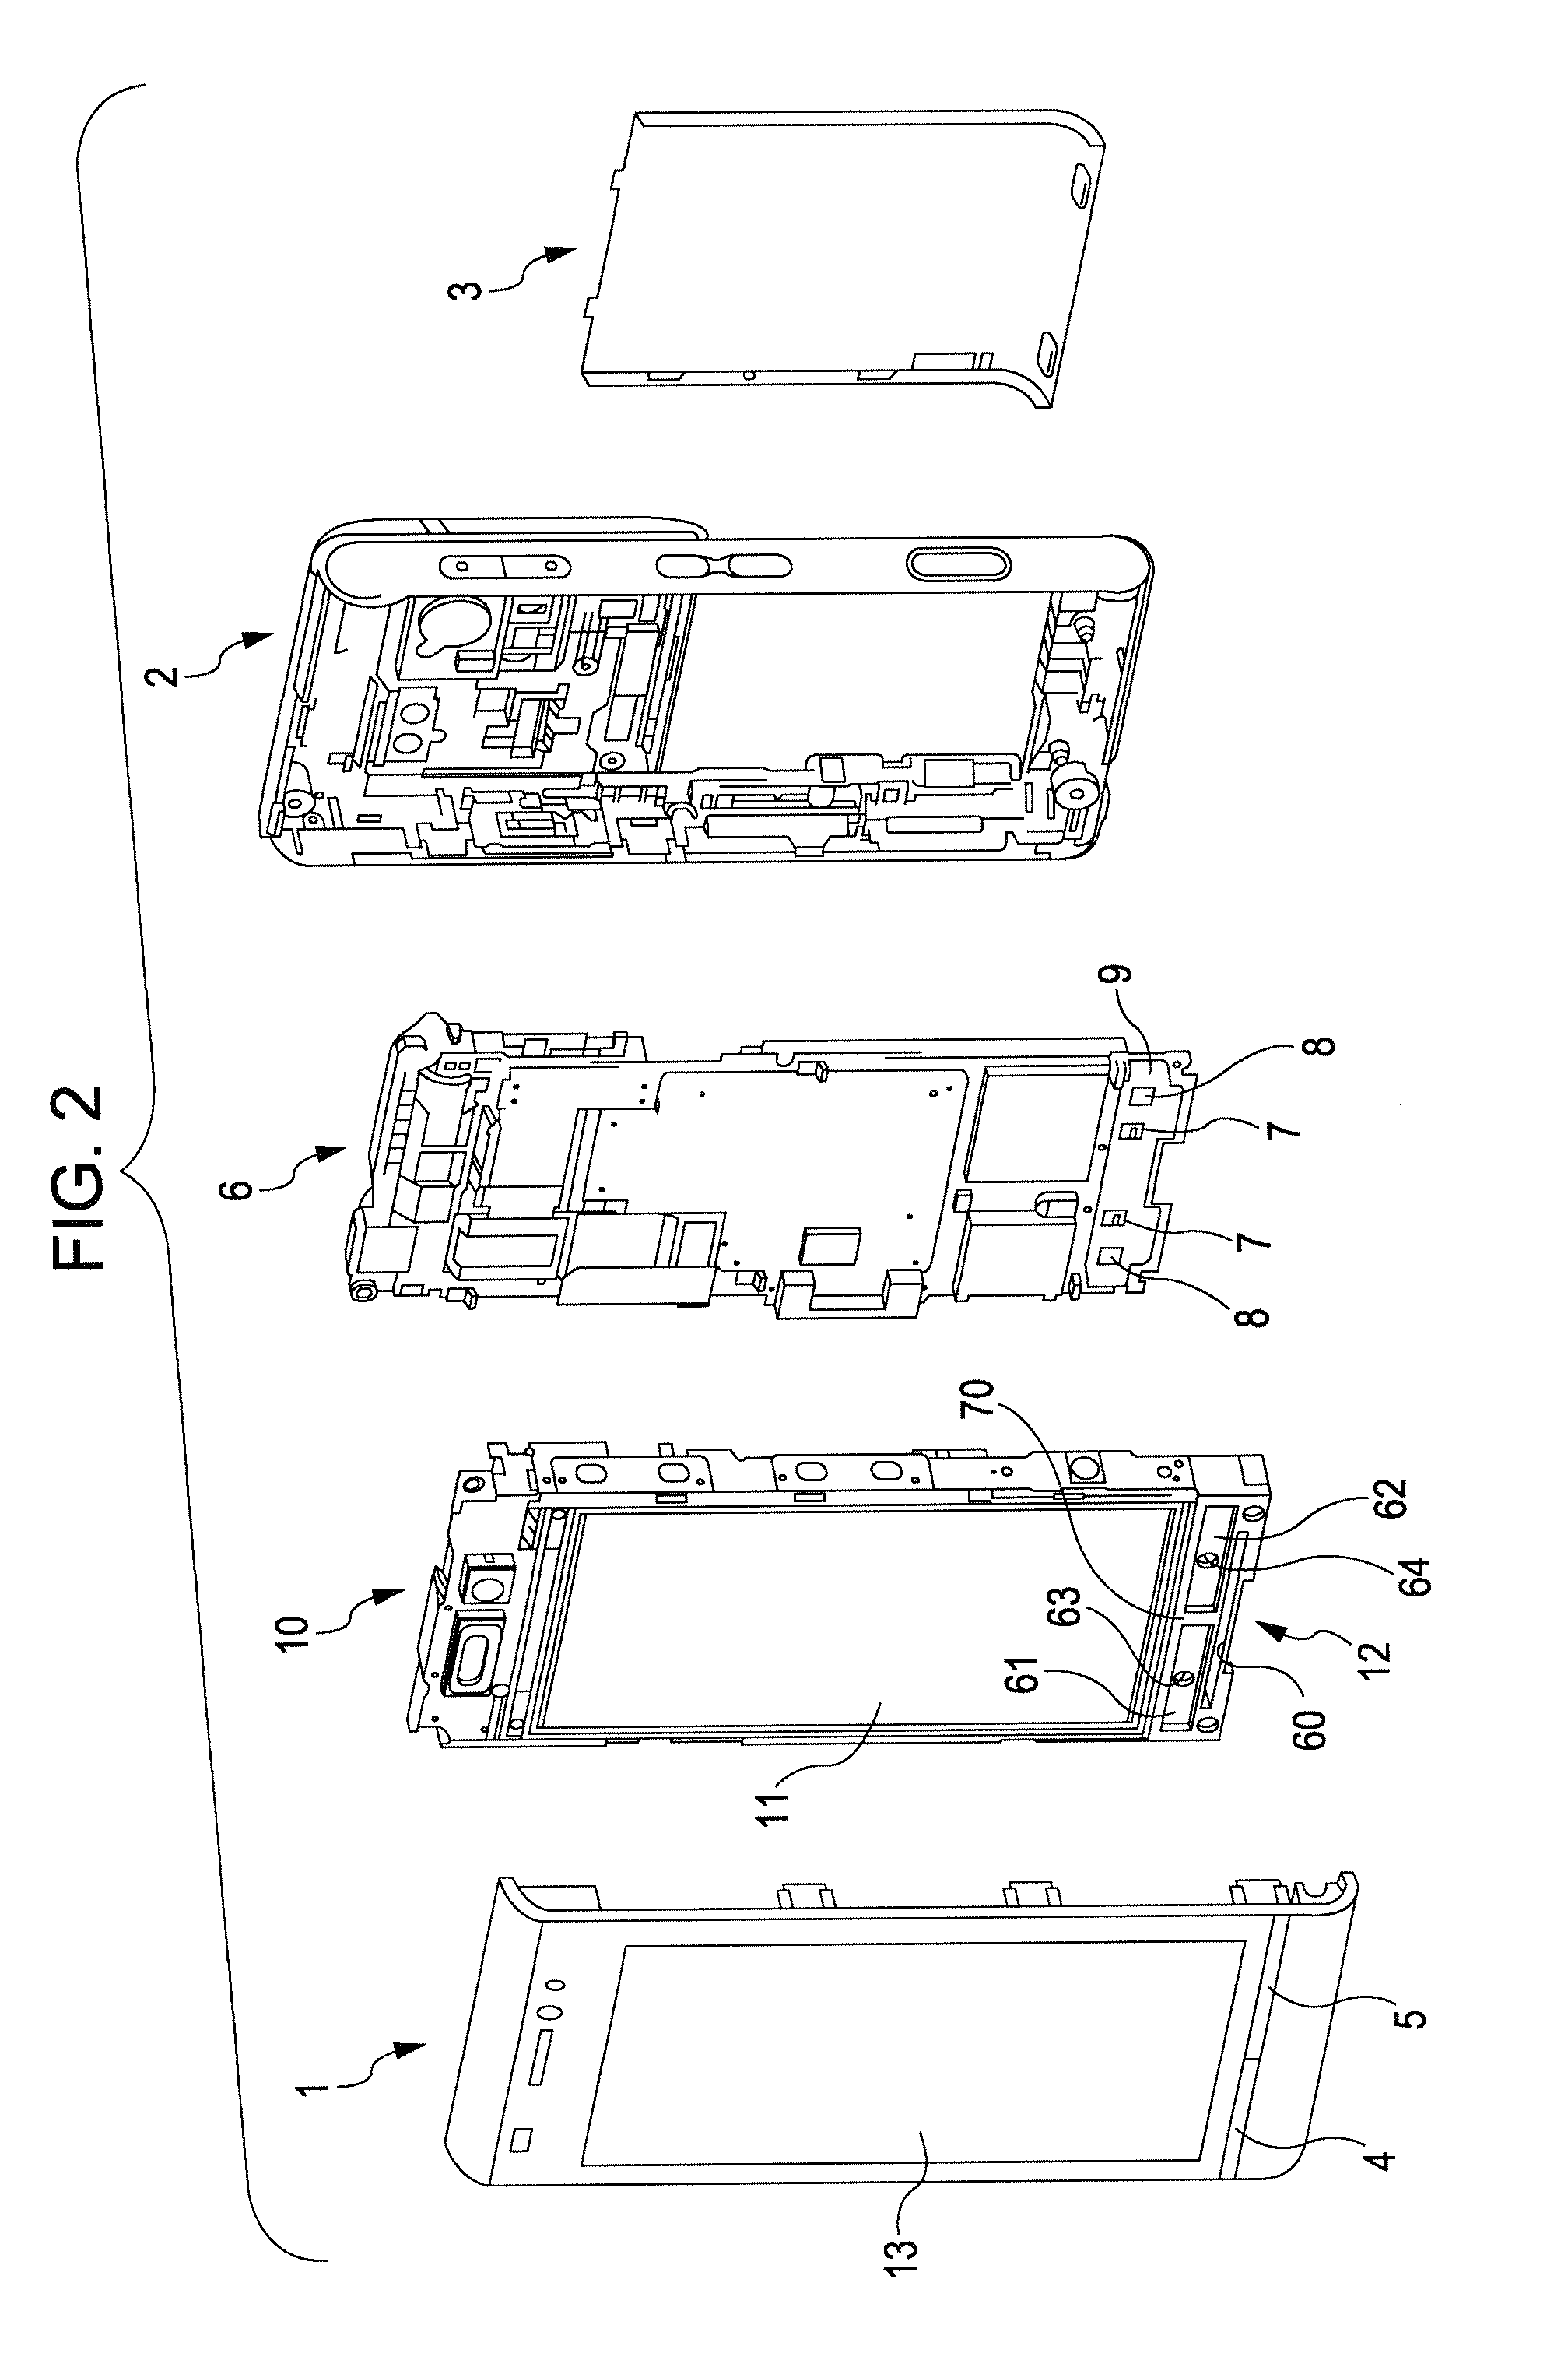 Button-key device and portable terminal apparatus